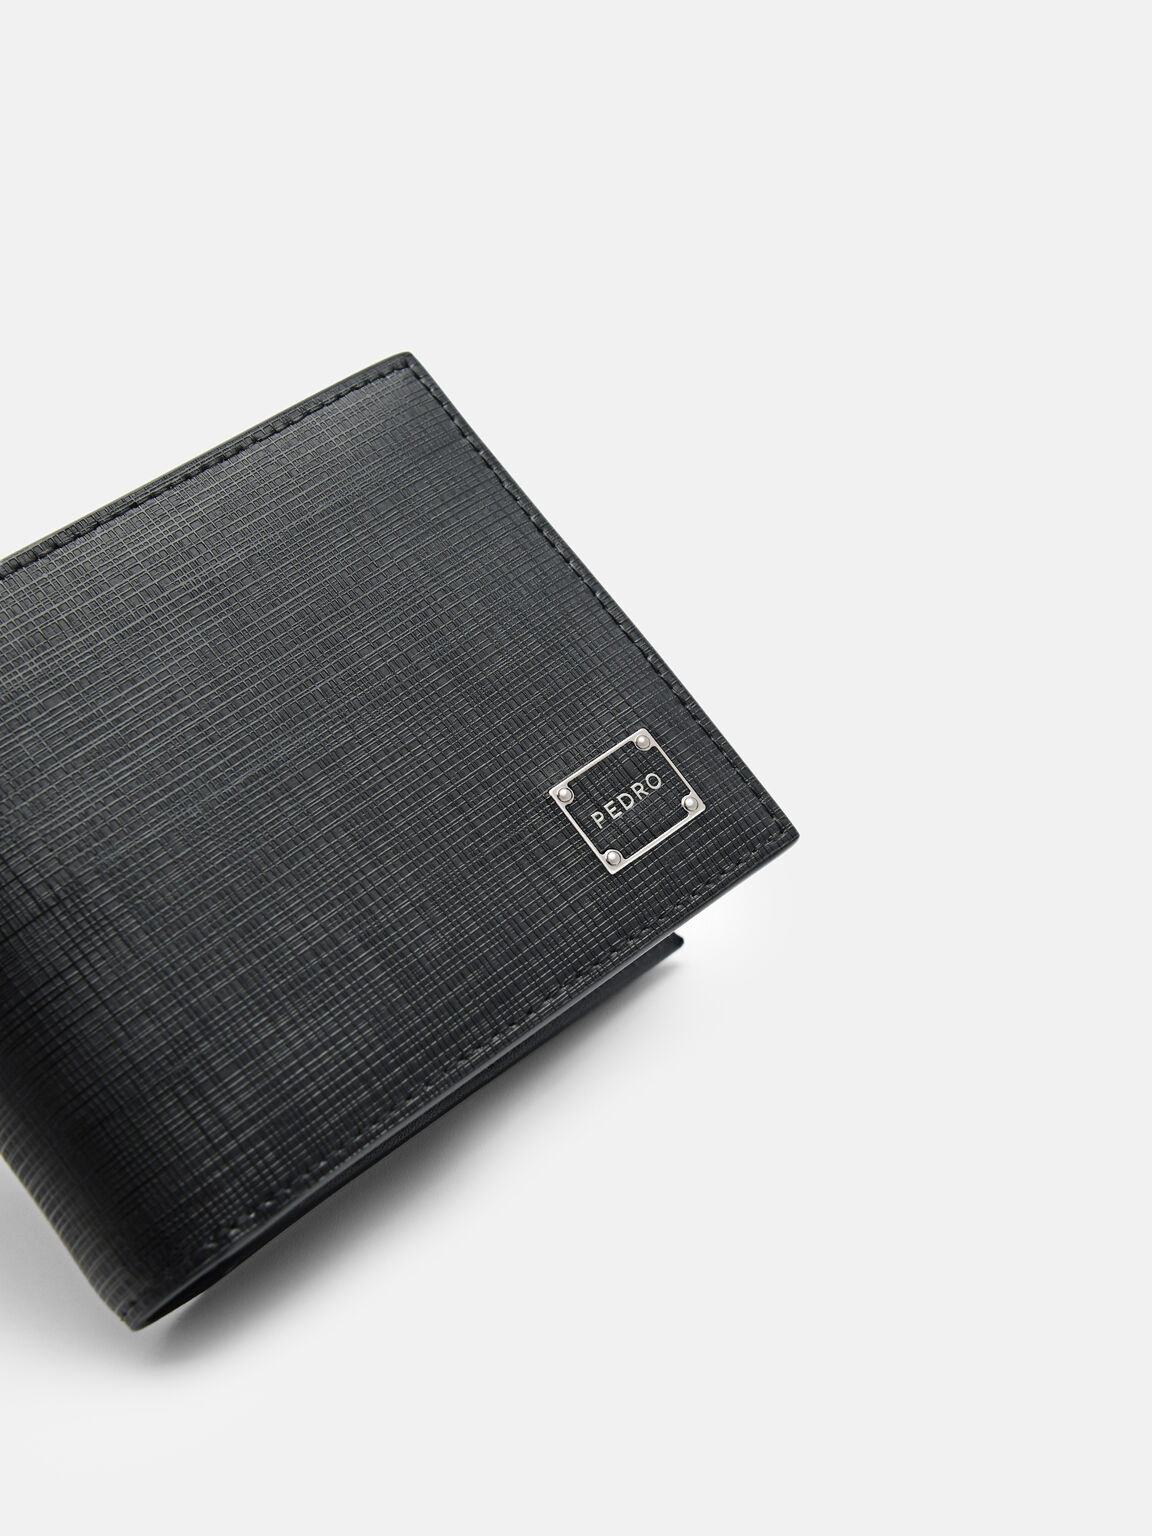 Textured Leather Wallet, Black, hi-res